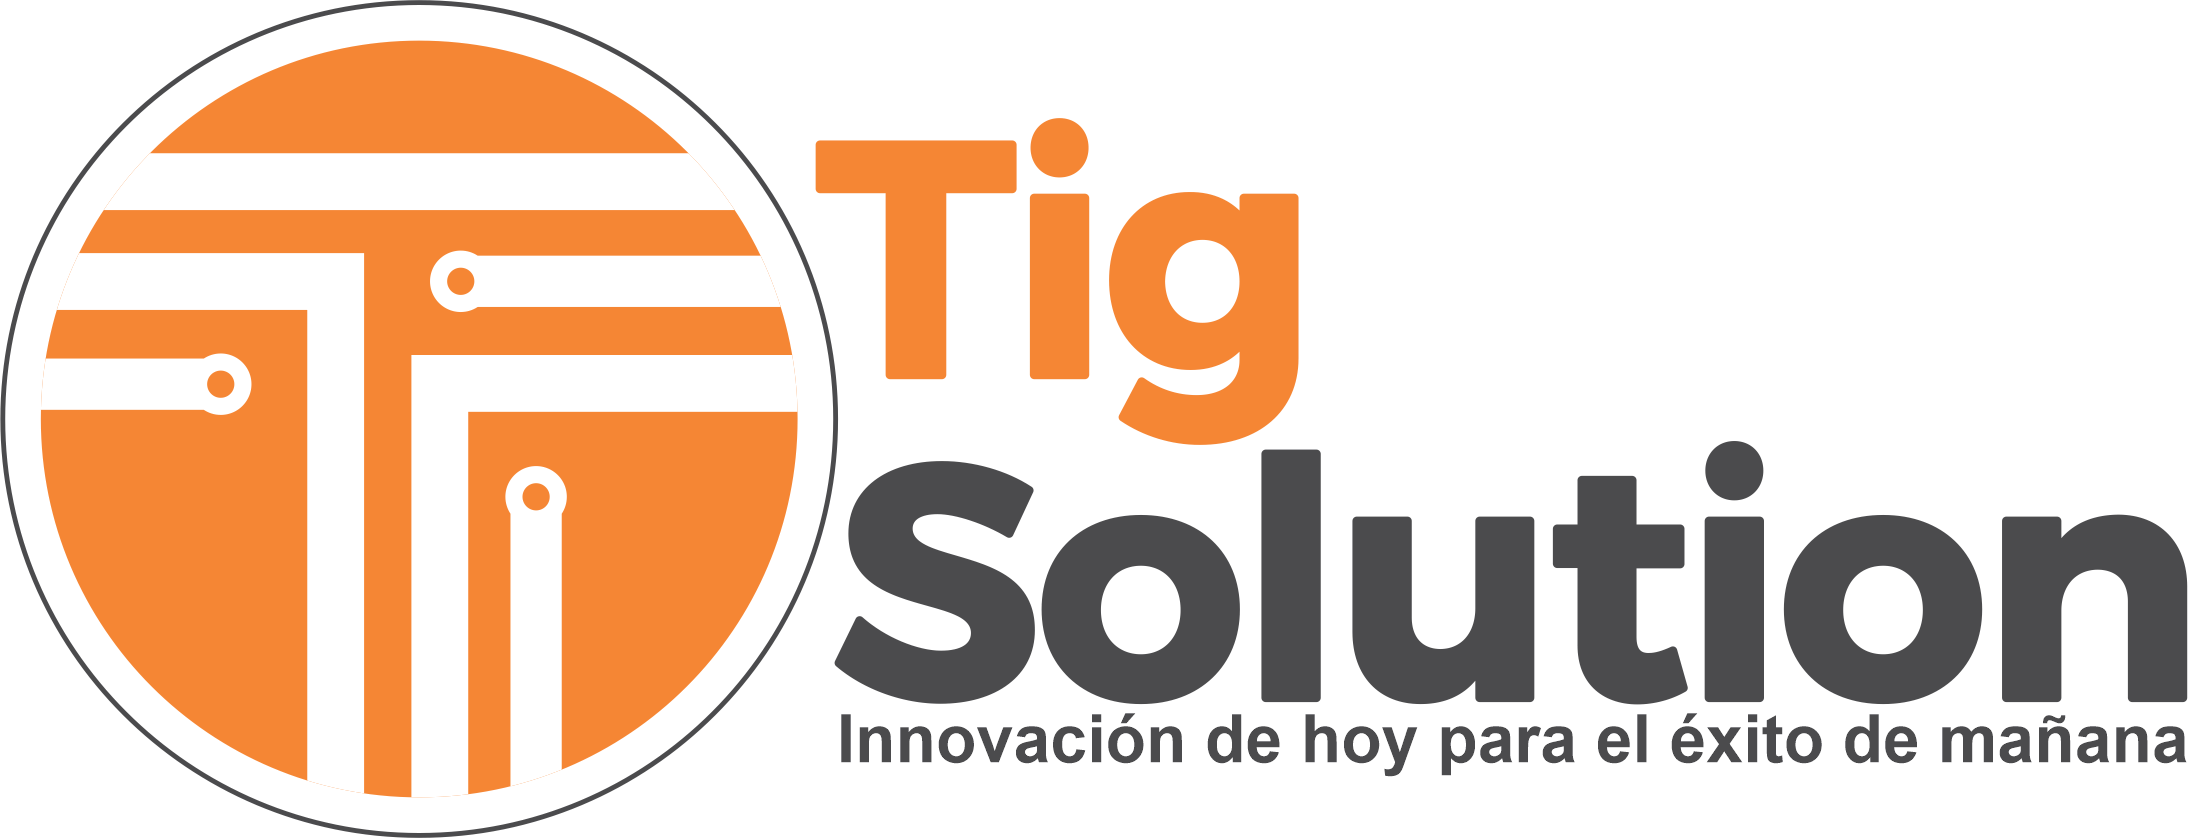 Tig Solution Guatemala